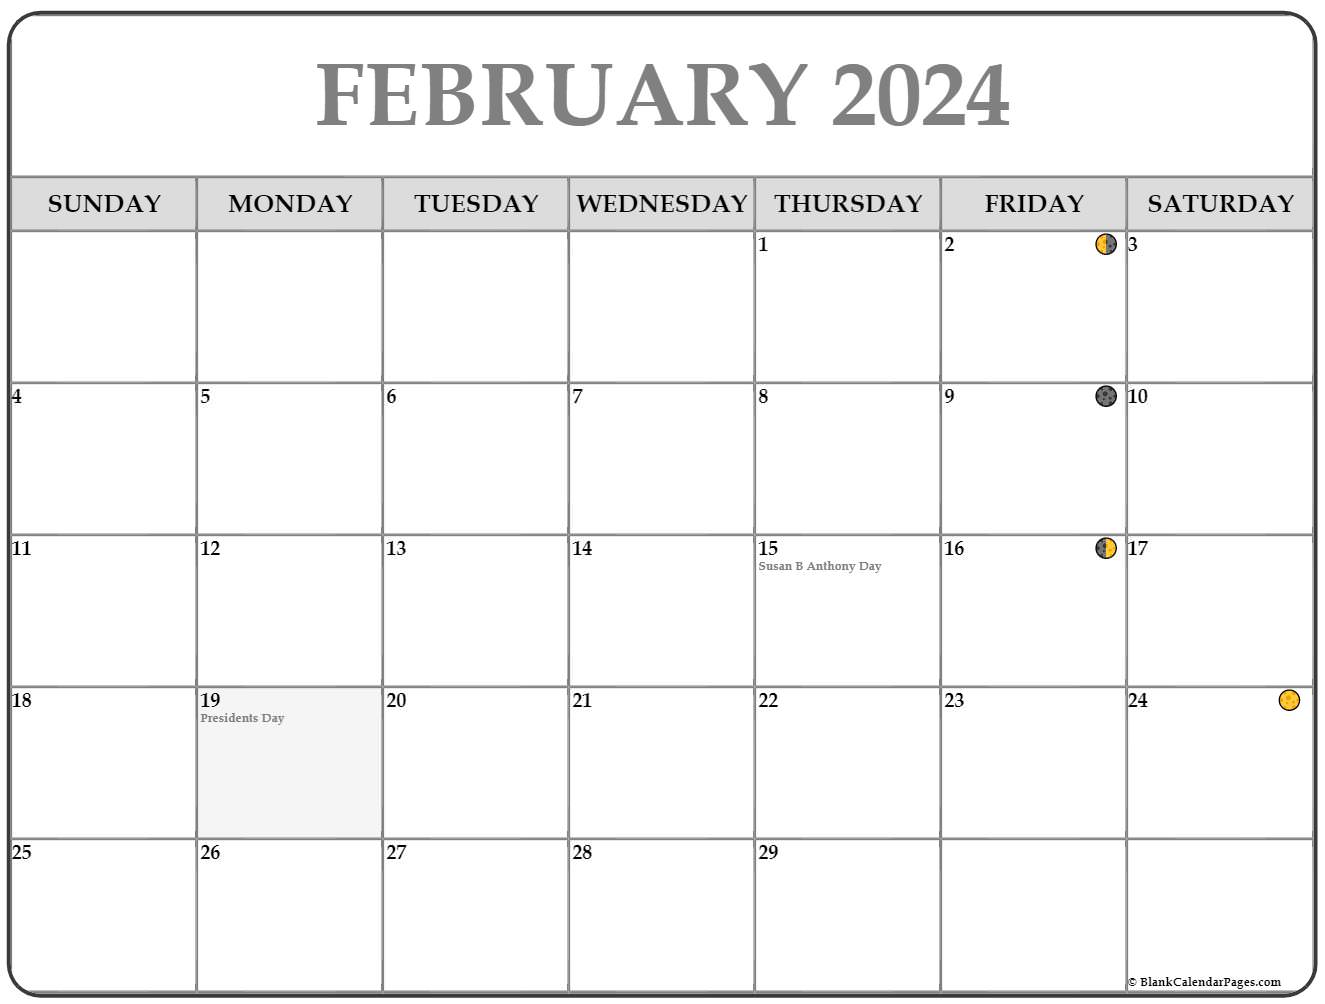 February 2024 Lunar Calendar Moon Phase Calendar